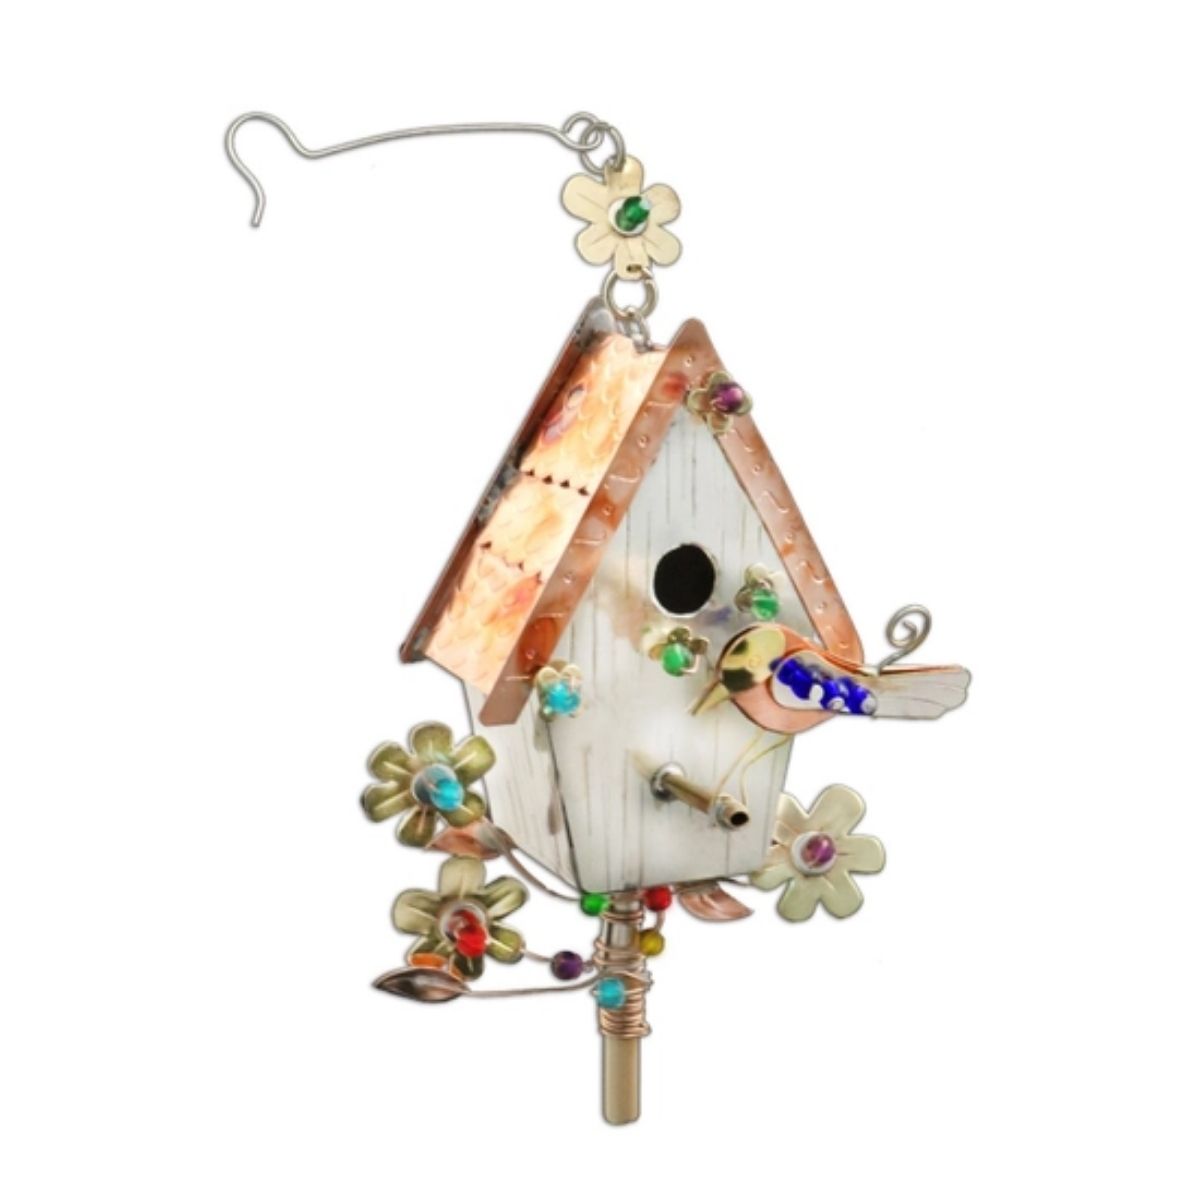 Bluebird ornament, birdhouse ornament, fair trade